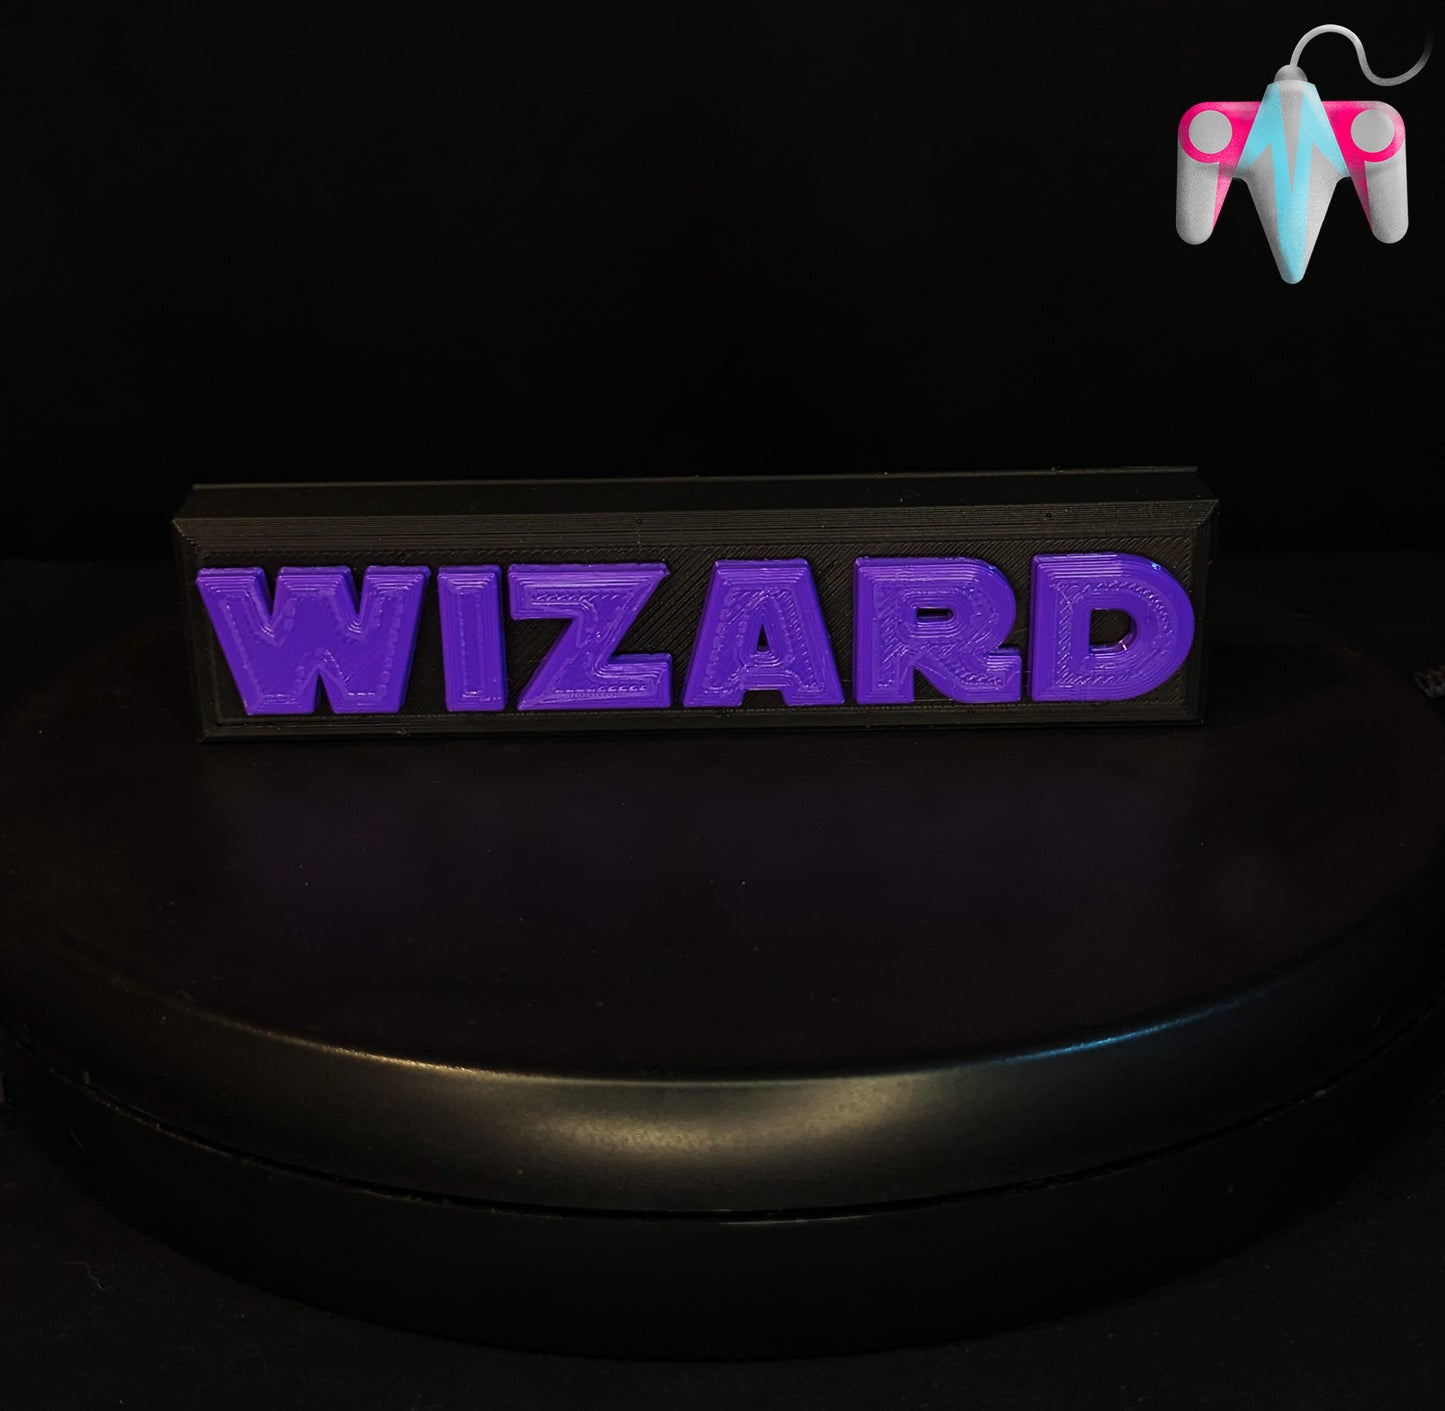 3D Printed WIZARD Plaque Wall/Shelf Decor (FREE SHIPPING)